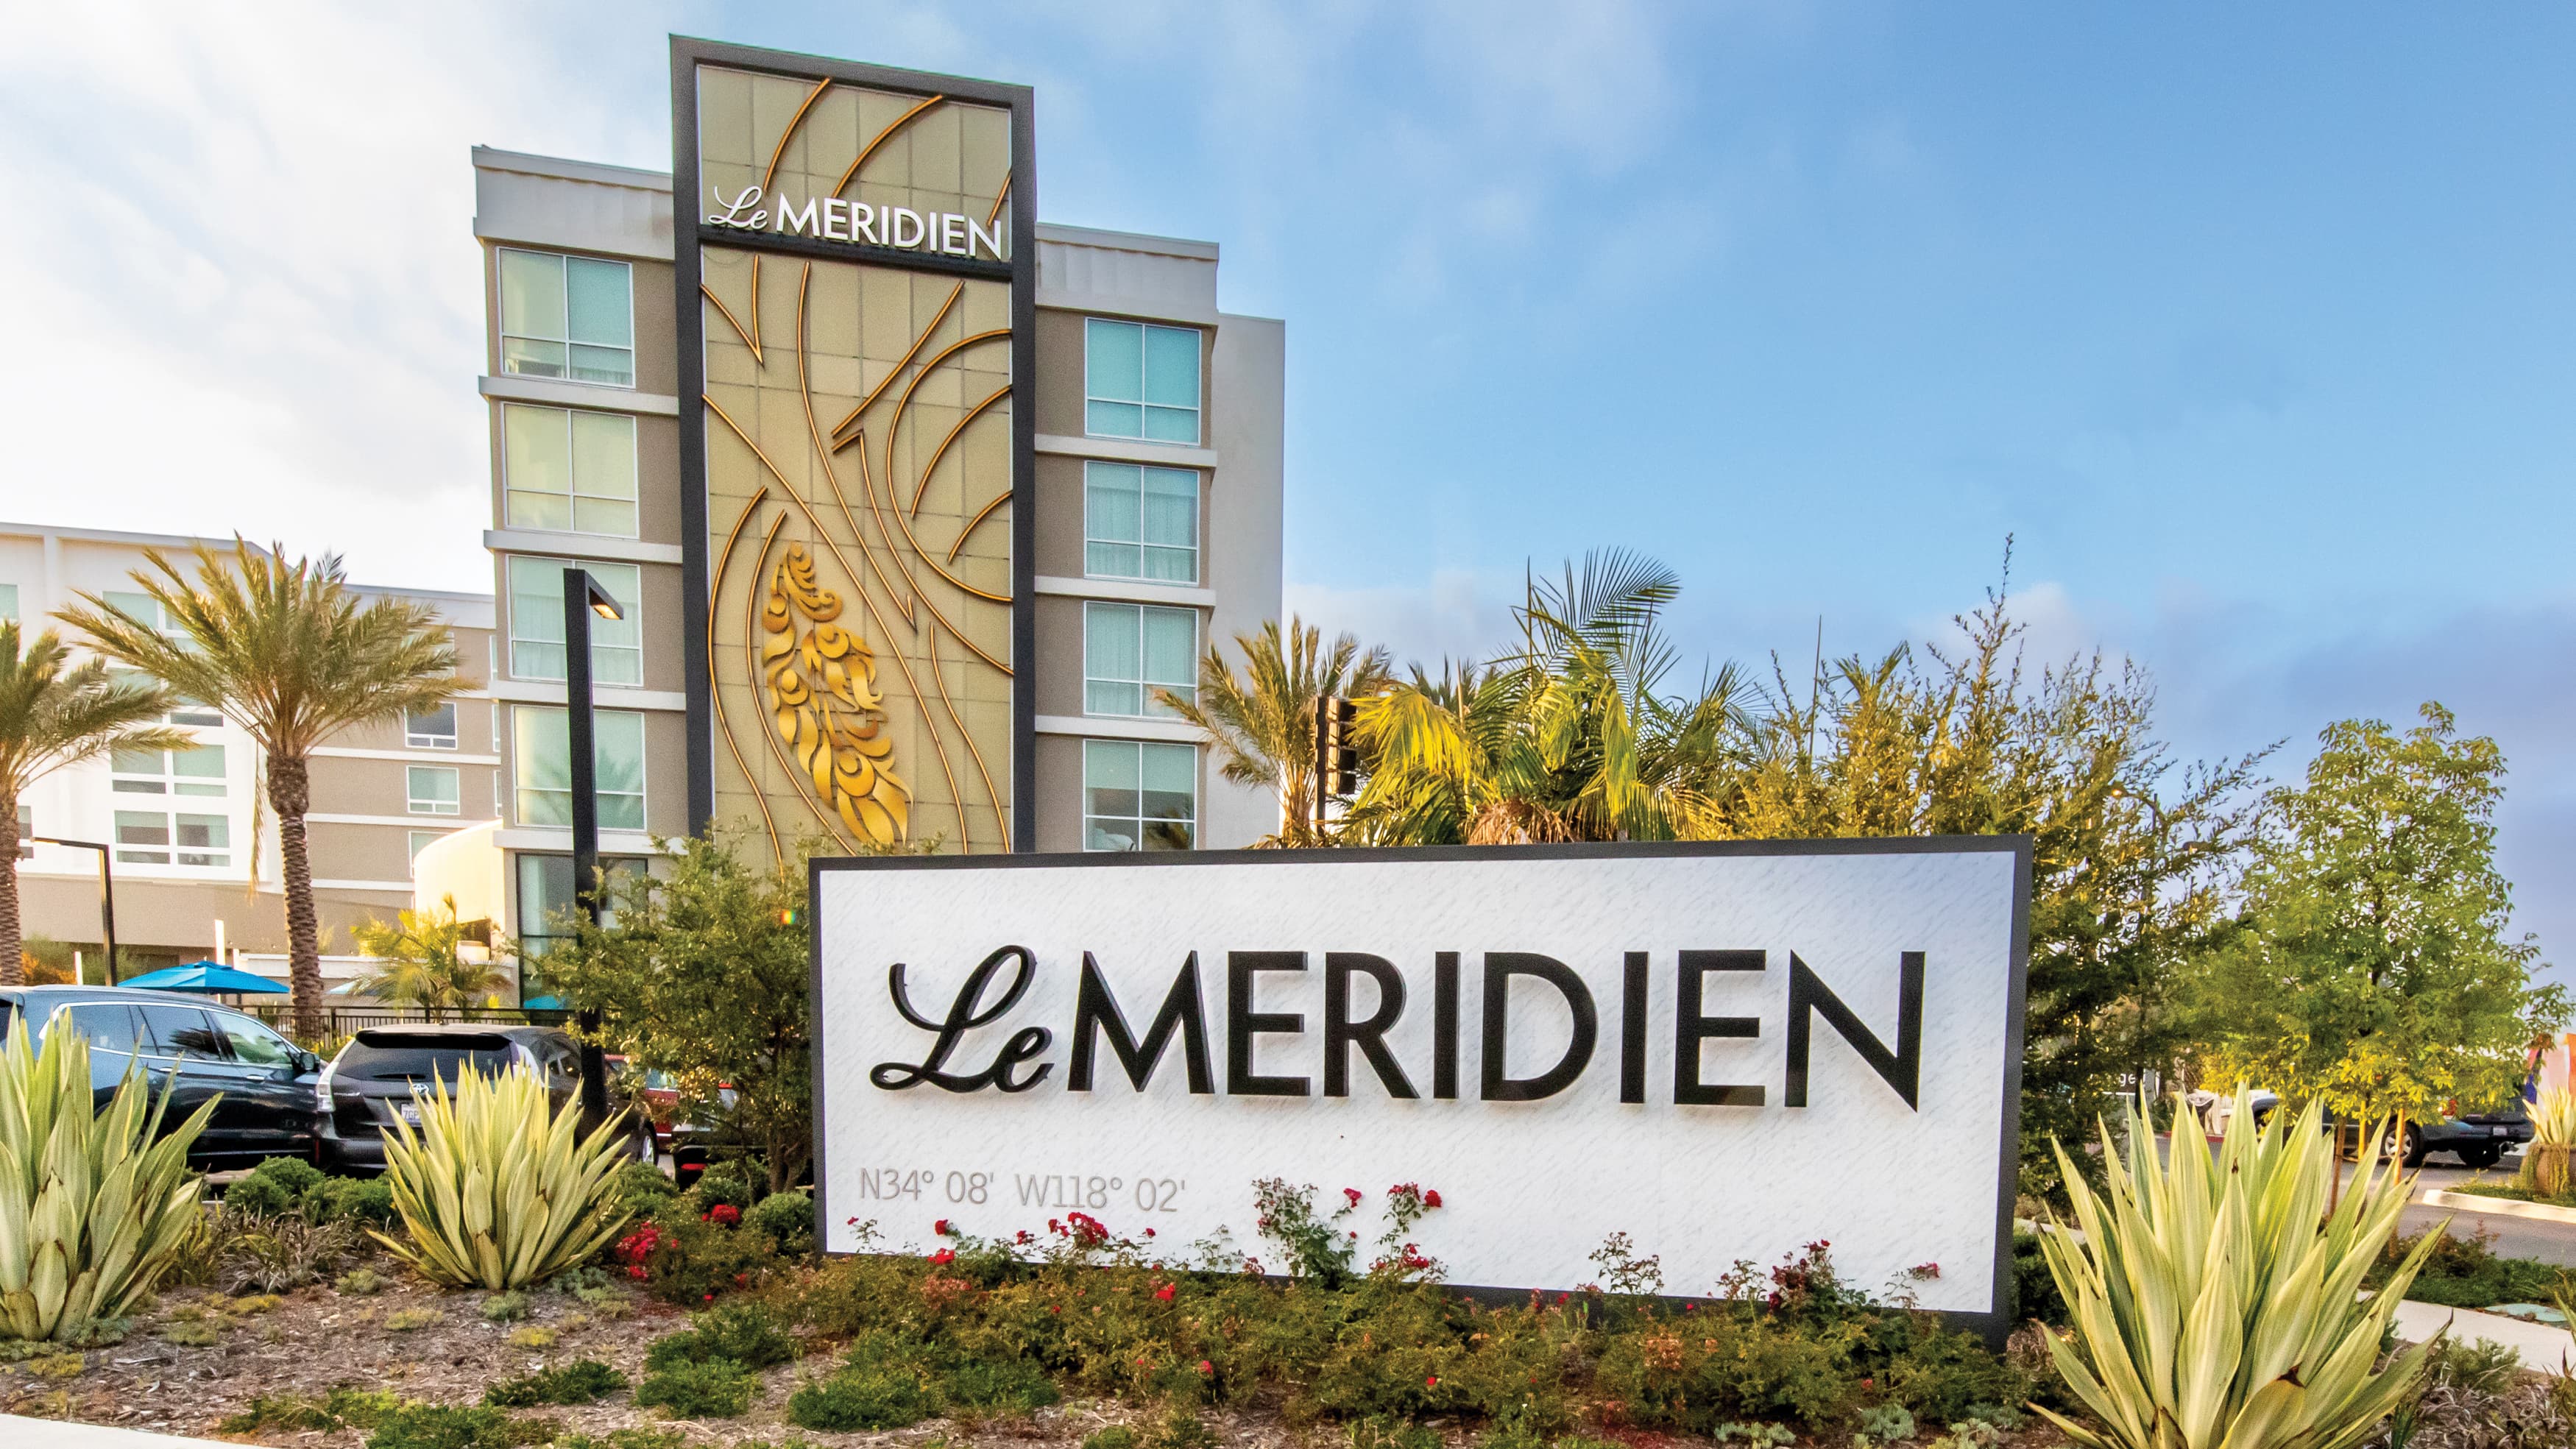 Le Meridien, a four star destination hotel, sits adjacent to the Santa Anita Race track in Arcadia California.